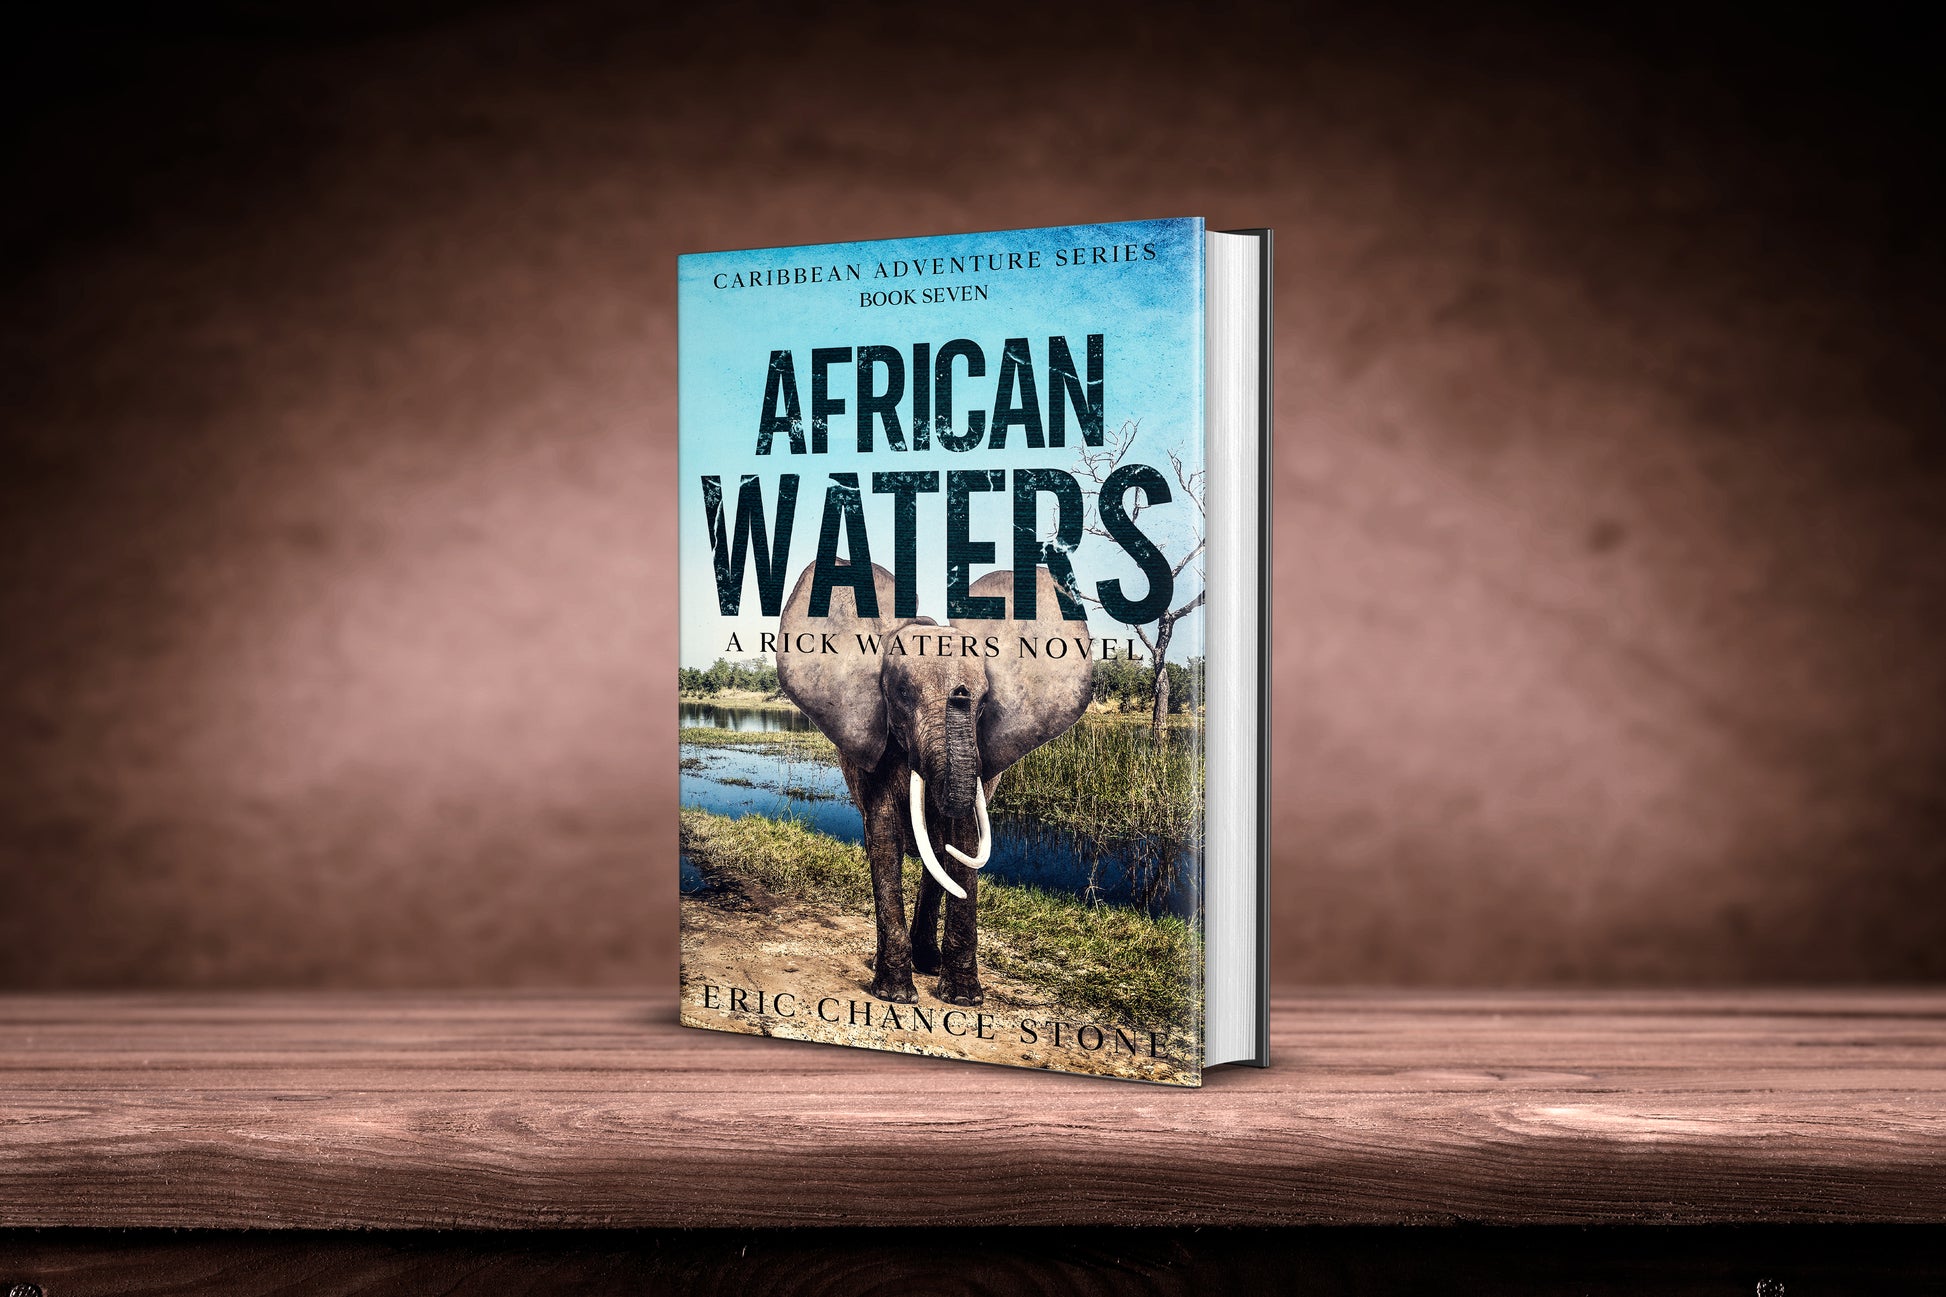 African Waters Paperback - Book 7: A Rick Waters Novel (Caribbean Adventure Series)